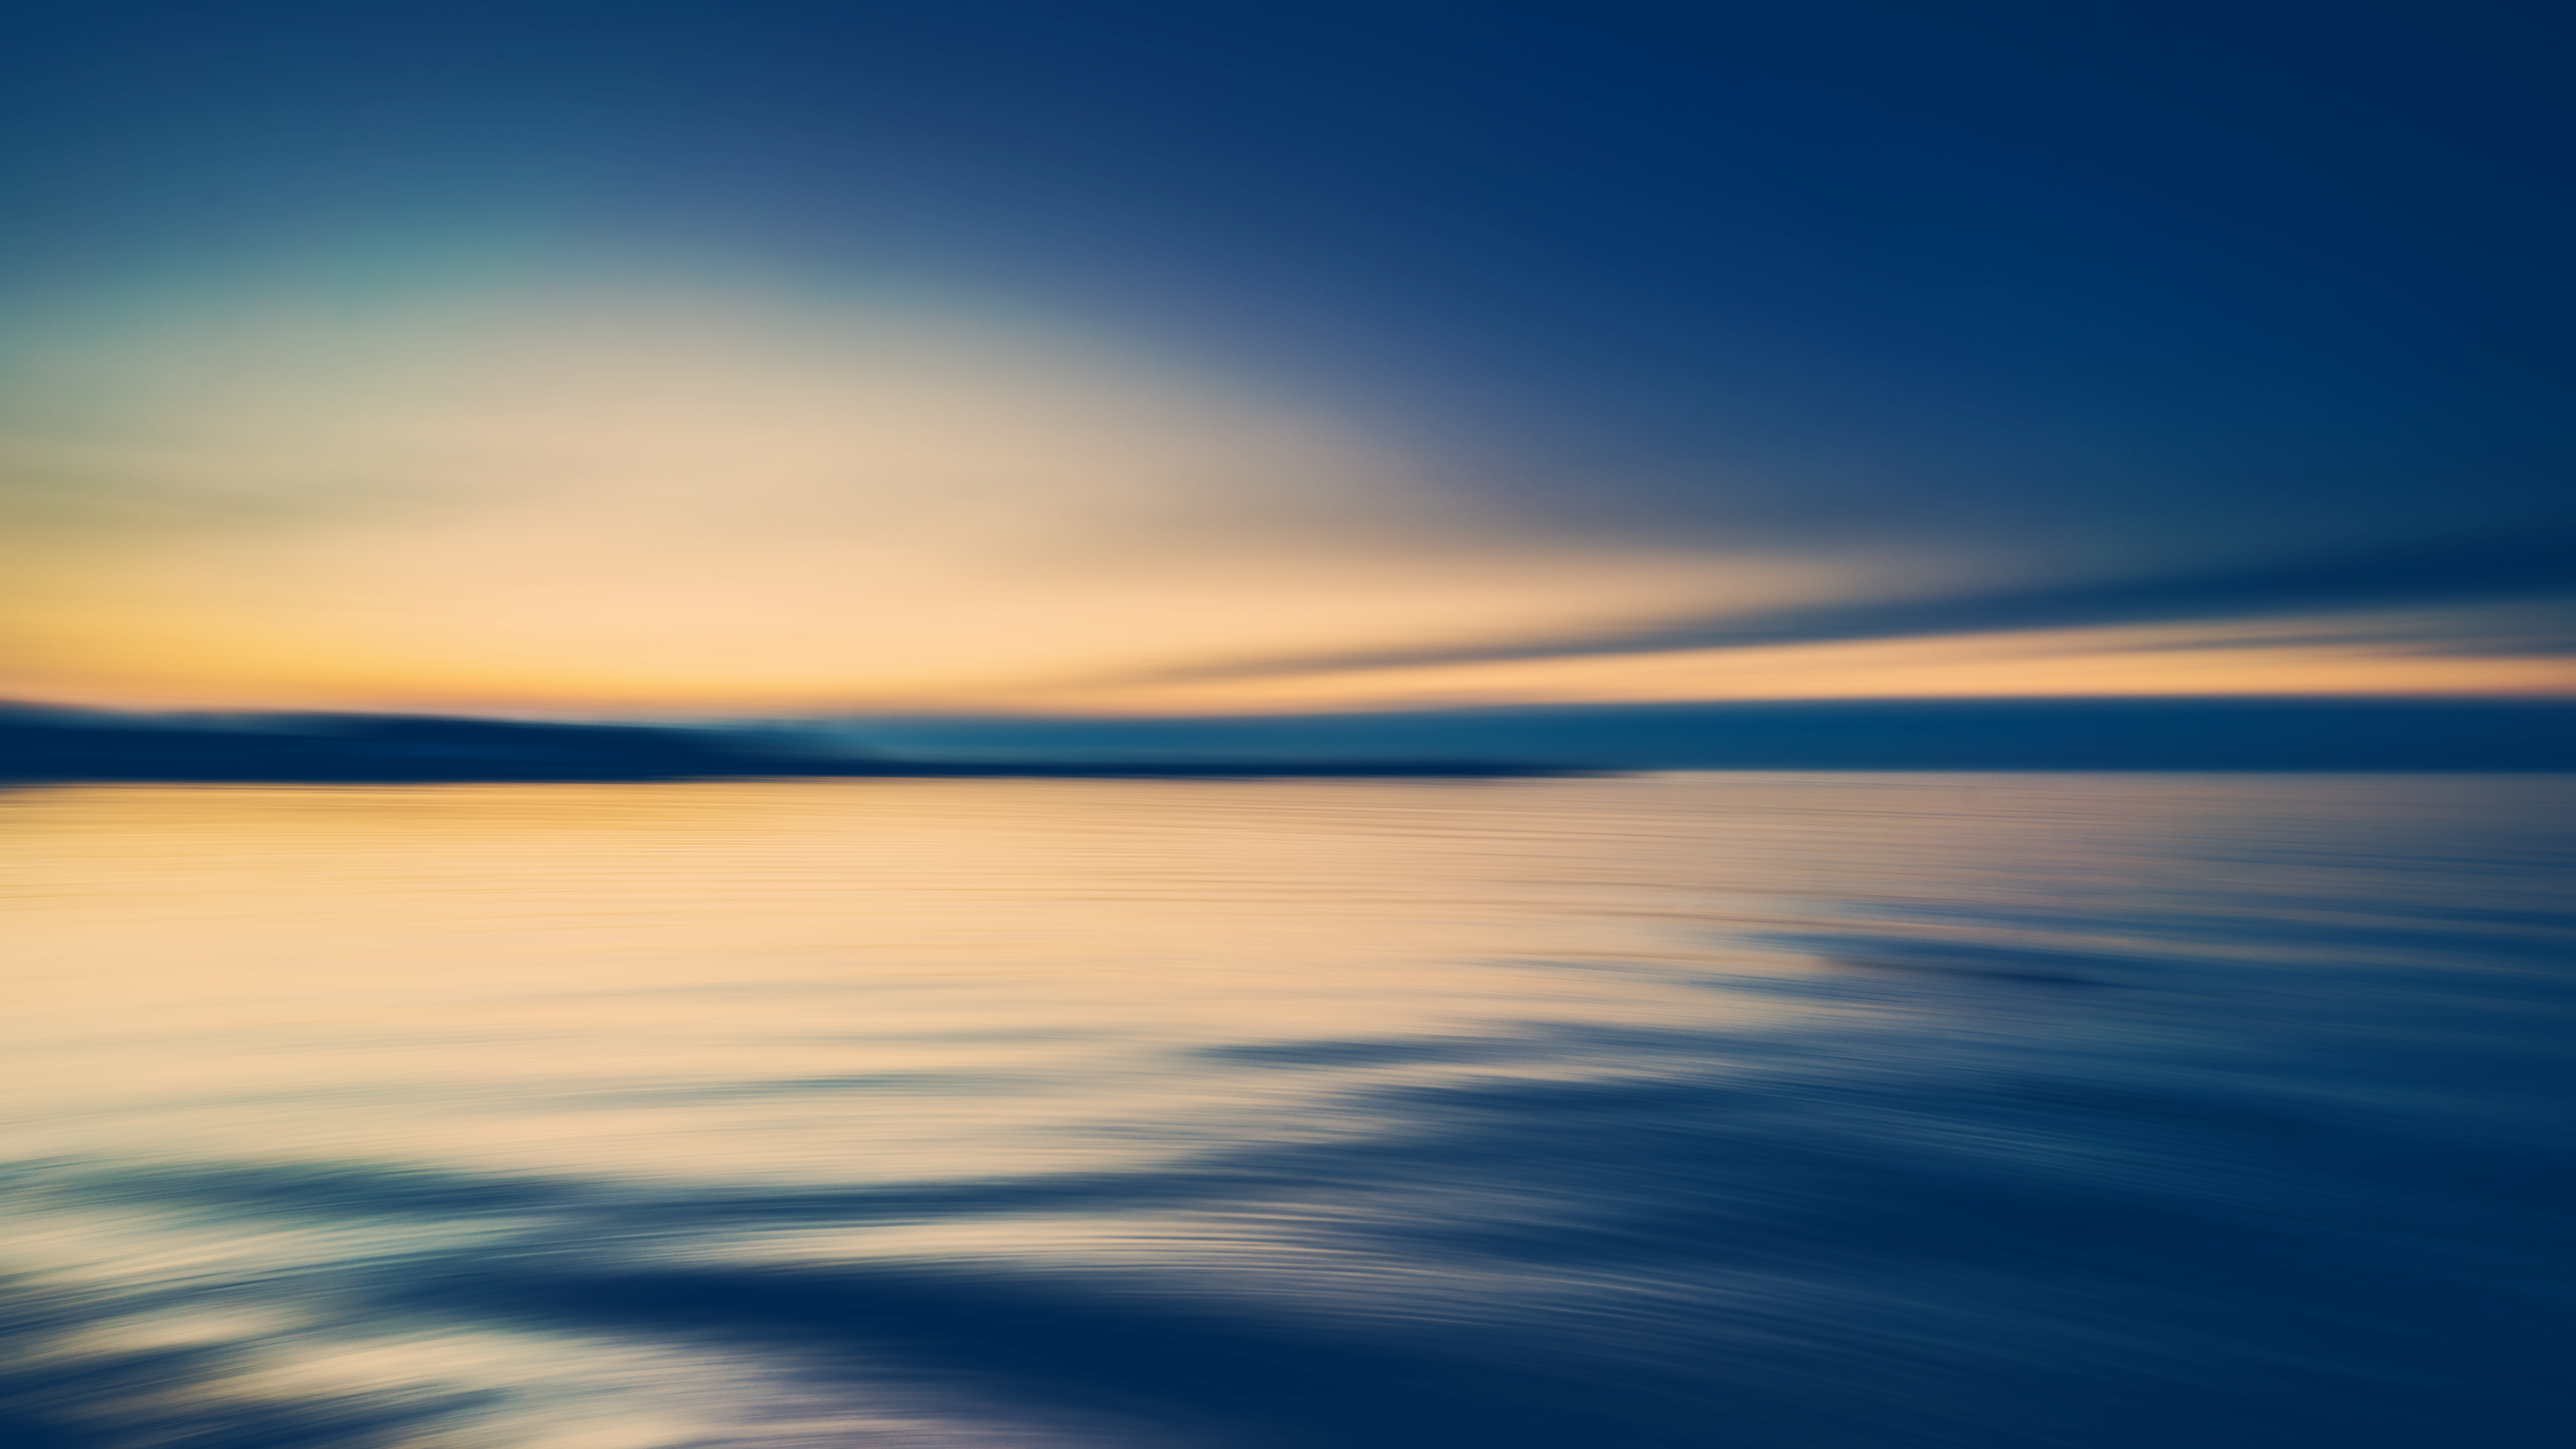 General 3840x2160 sea shore horizon water sky blue yellow Sun sunset coast waves